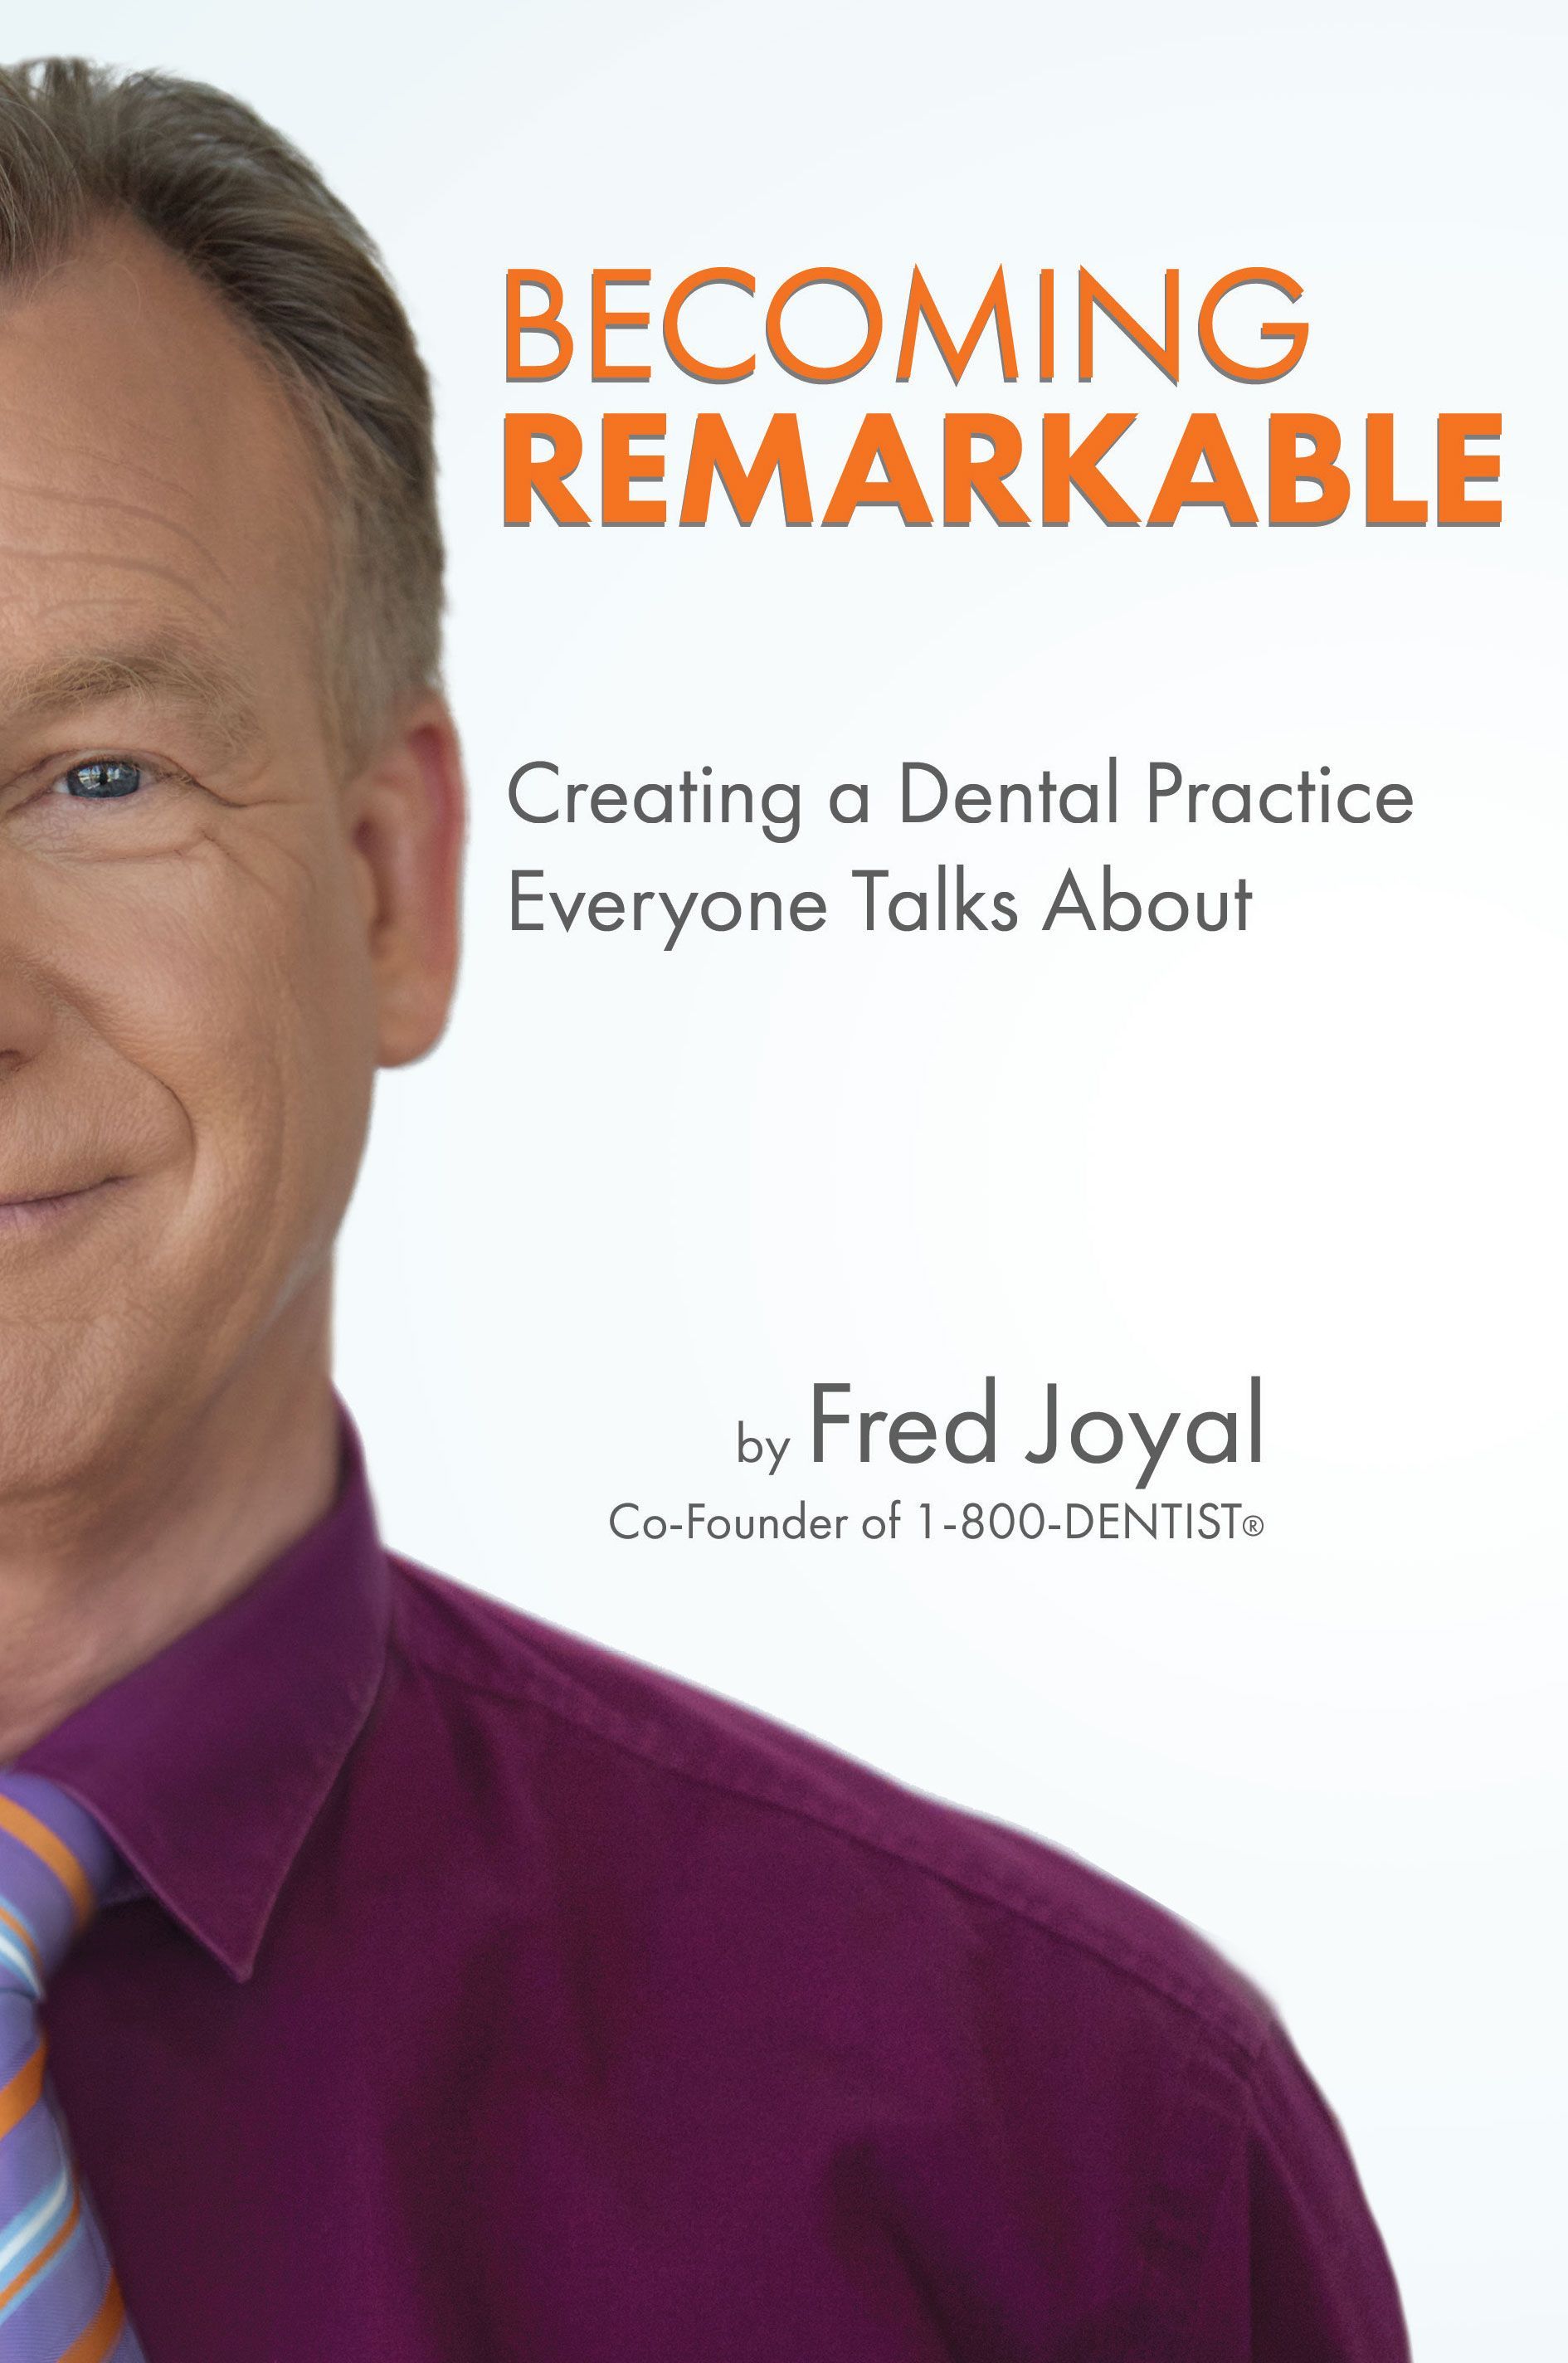 Fred Joyal Becoming remarkable